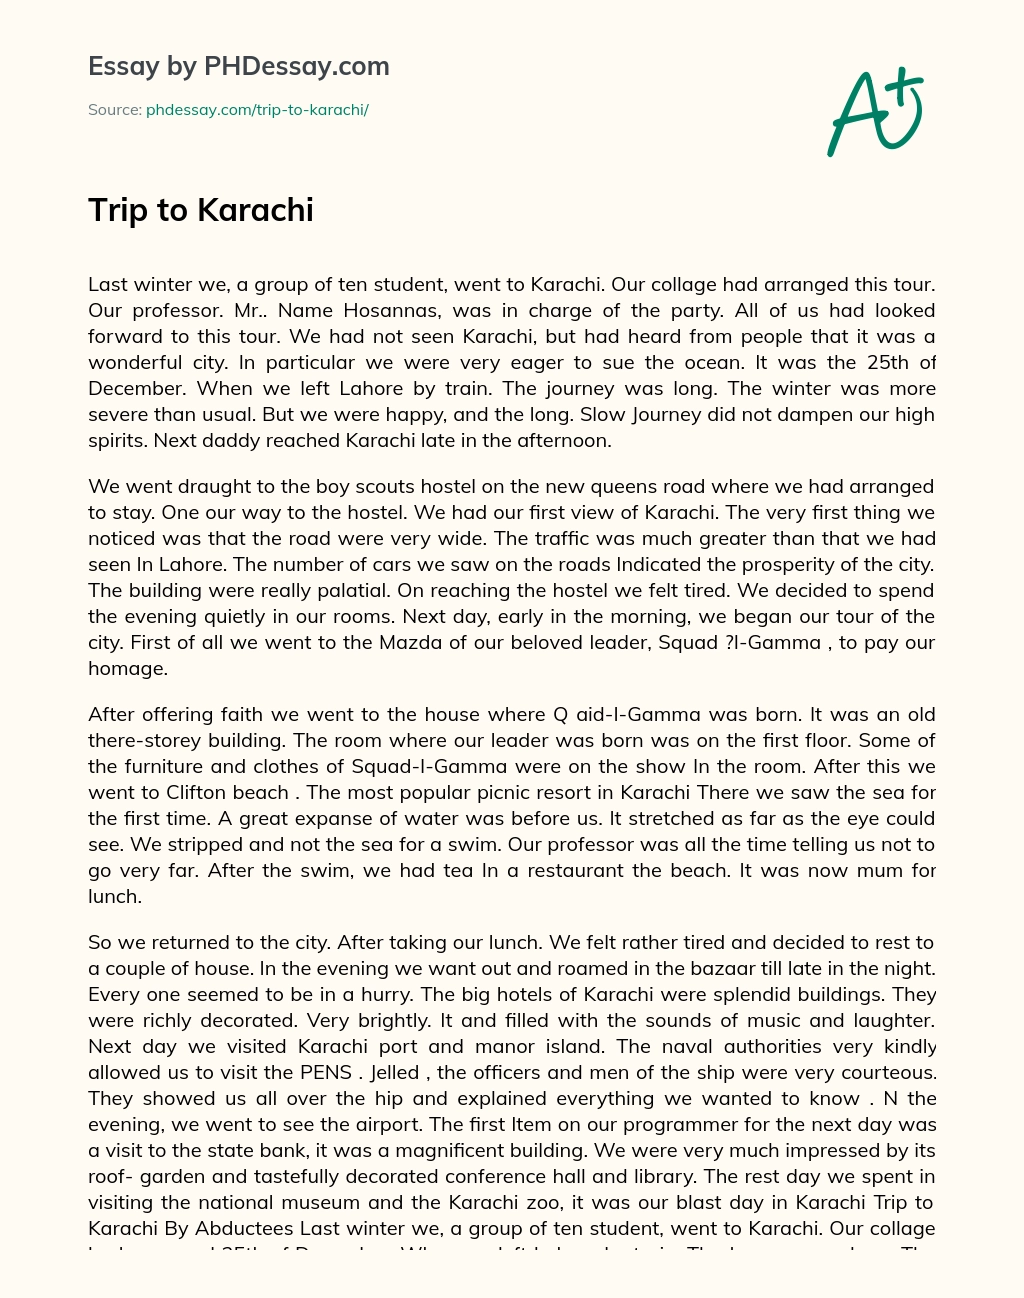 descriptive essay on karachi